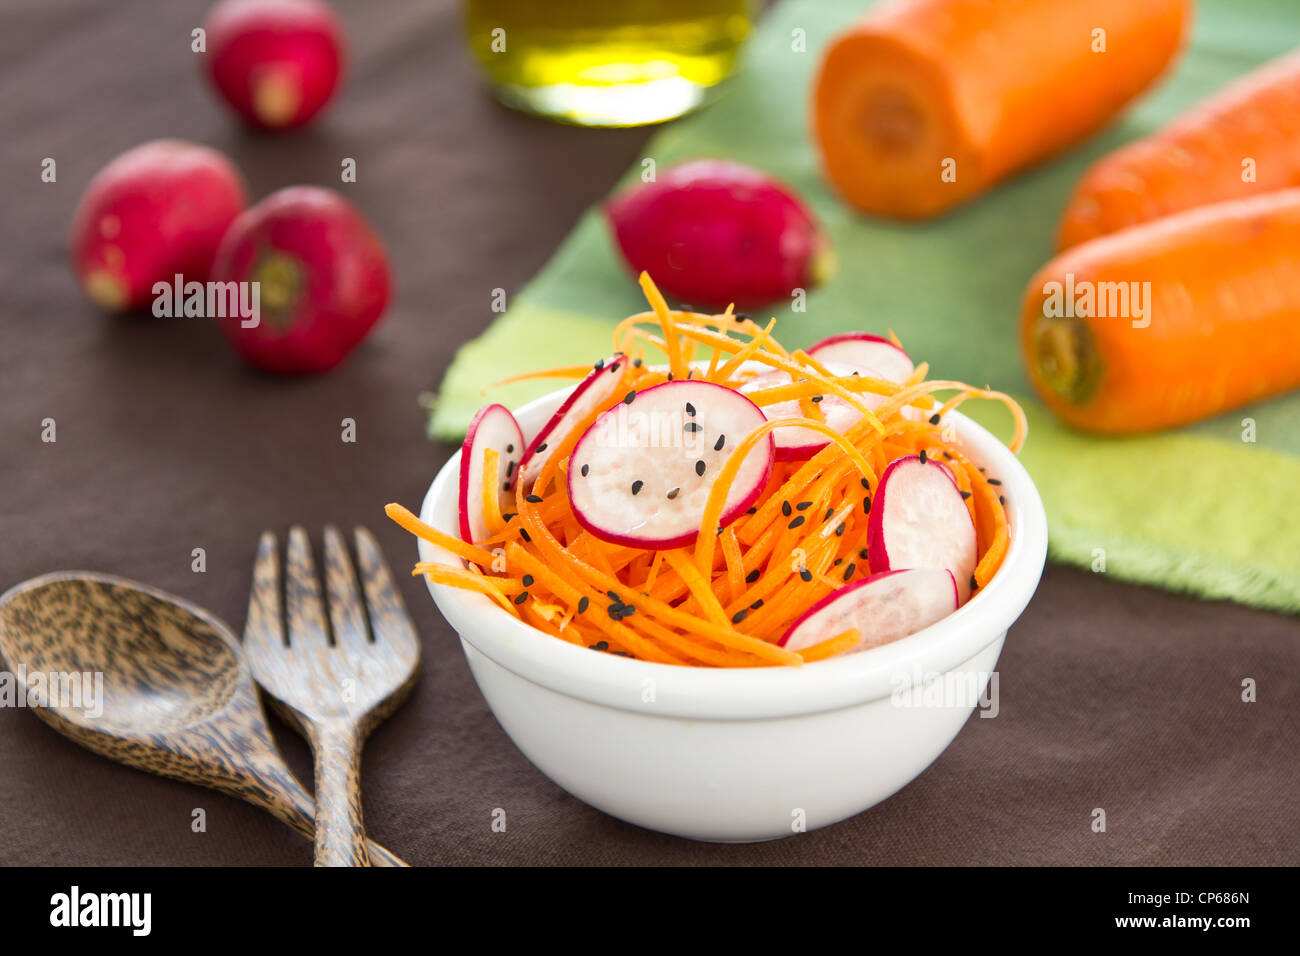 Carrot and radish salad Stock Photo